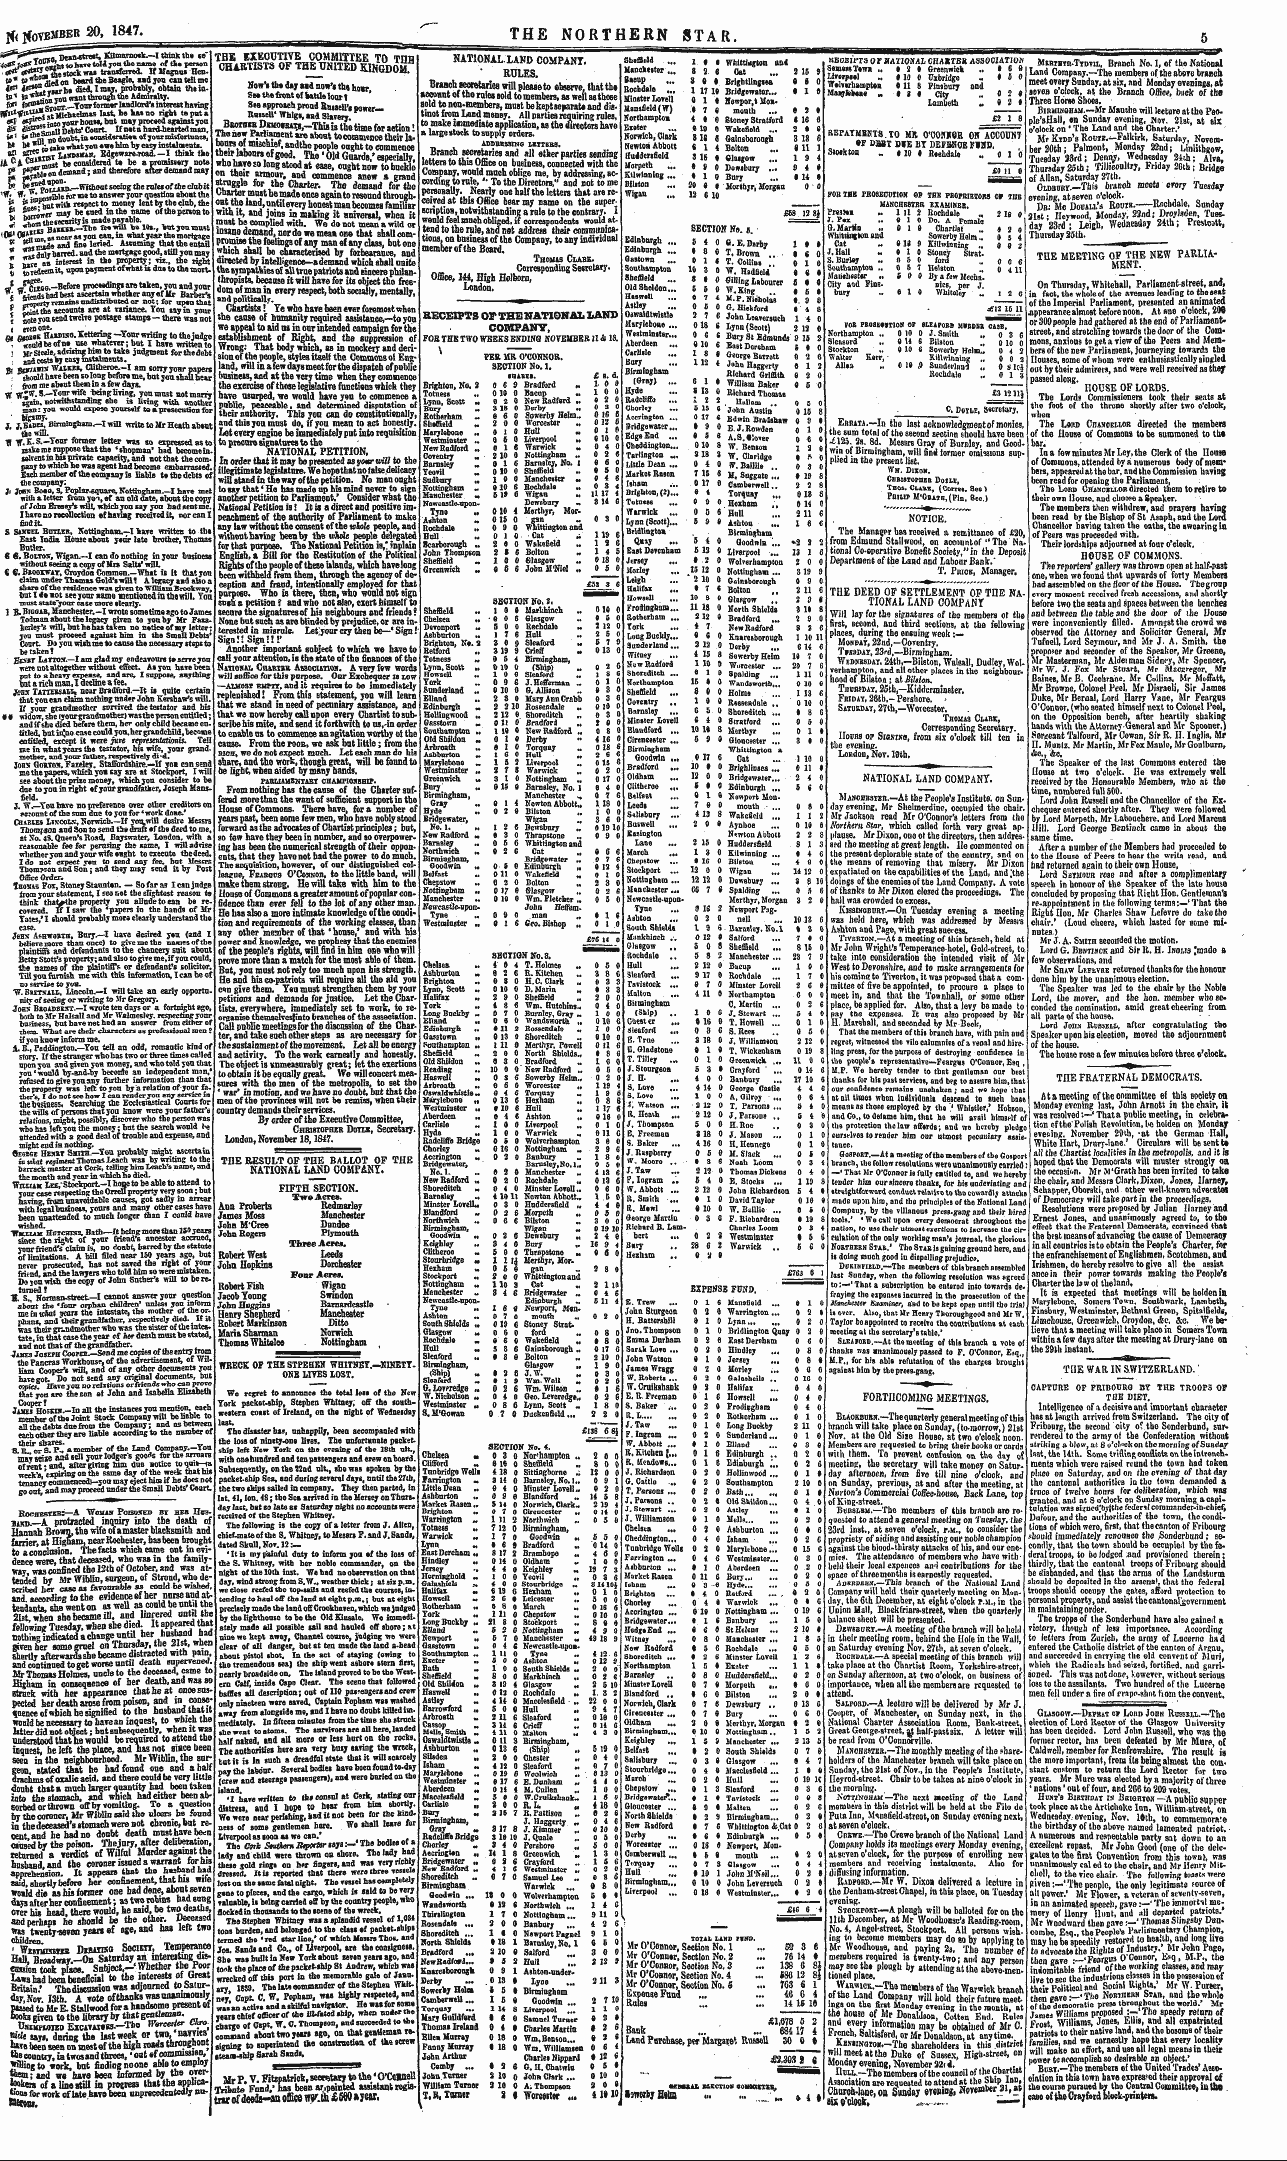 Northern Star (1837-1852): jS F Y, 3rd edition - Nat10nalland Company.. ' " '¦ Rules. Bra...